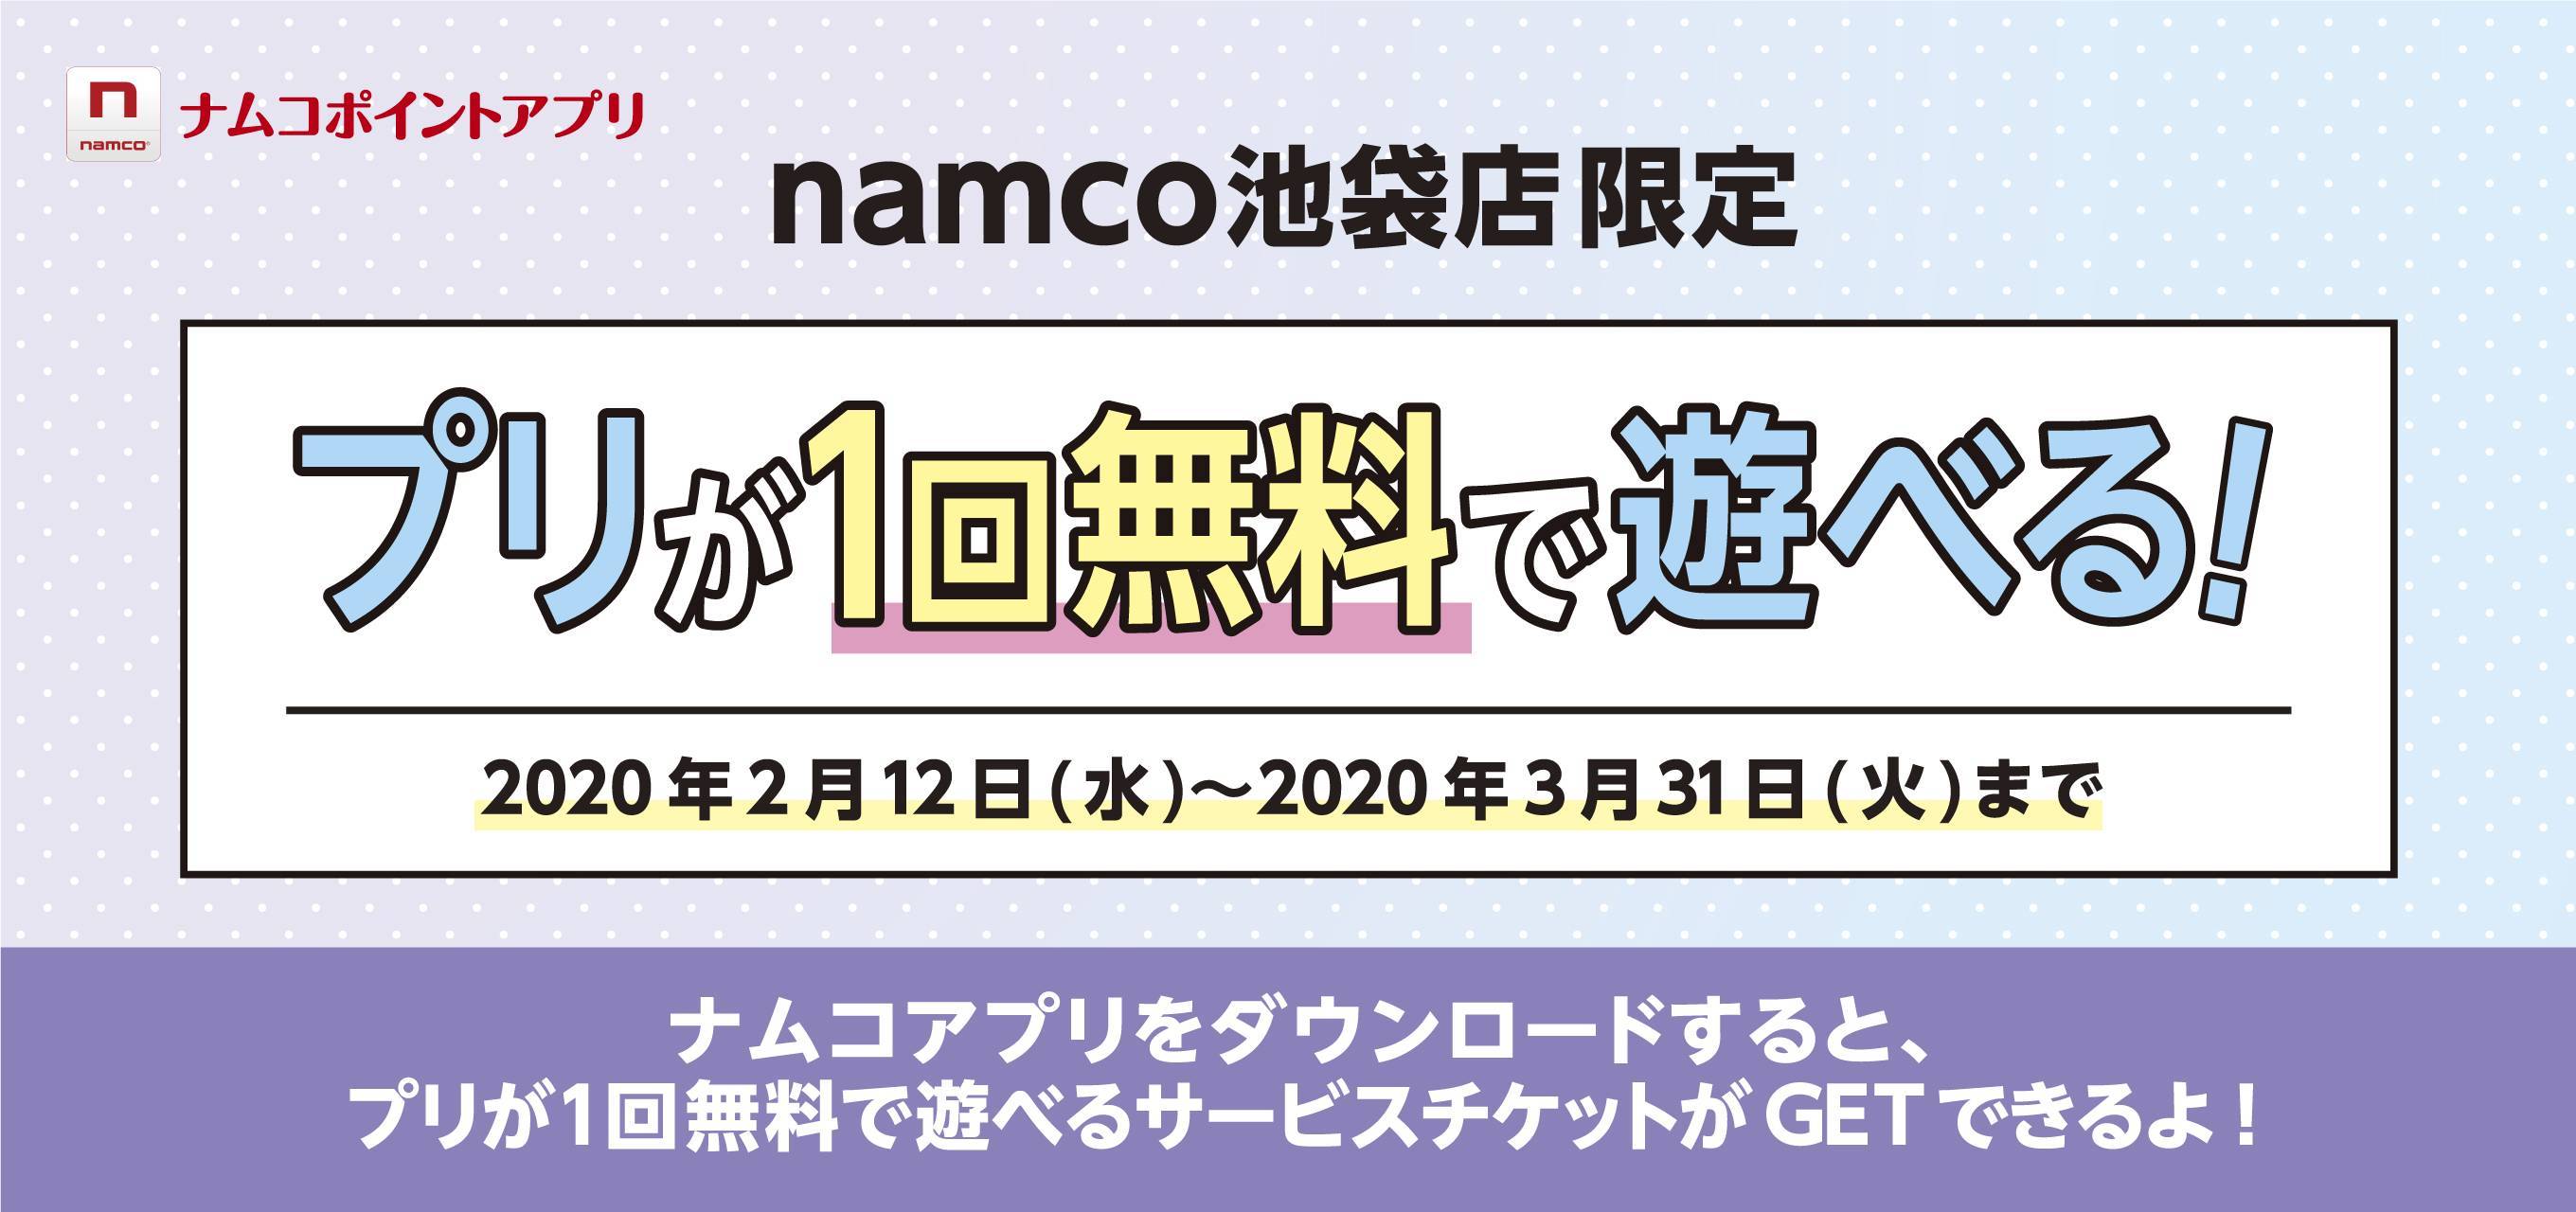 Namco池袋店 プリが1回無料で遊べるキャンペーン実施中 バンダイナムコアミューズメント 夢 遊び 感動 を